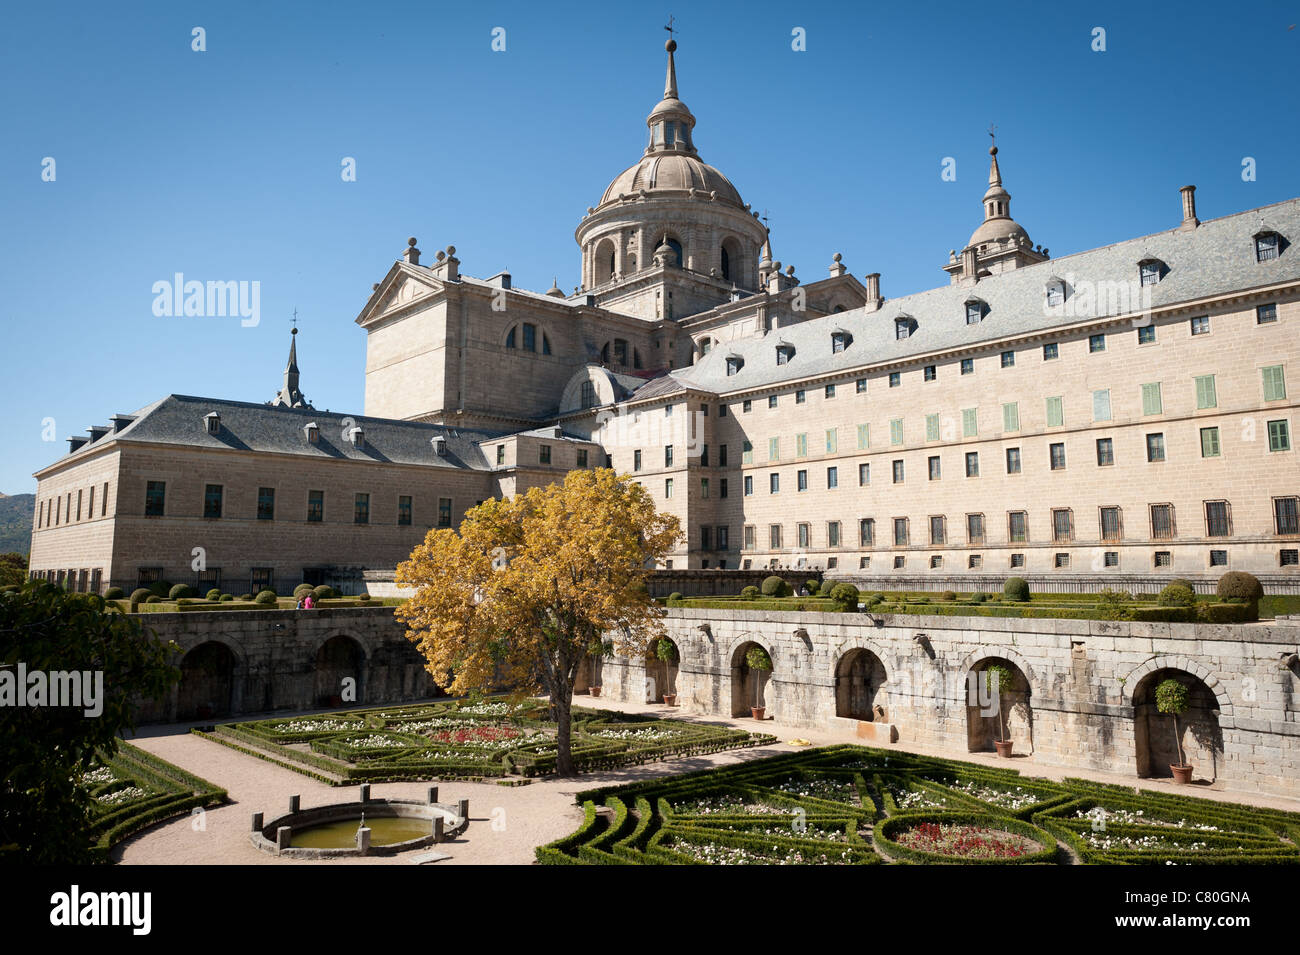 The San Lorenzo de El Escorial palace of the Spanish Kings, in Escorial, Spain. Stock Photo